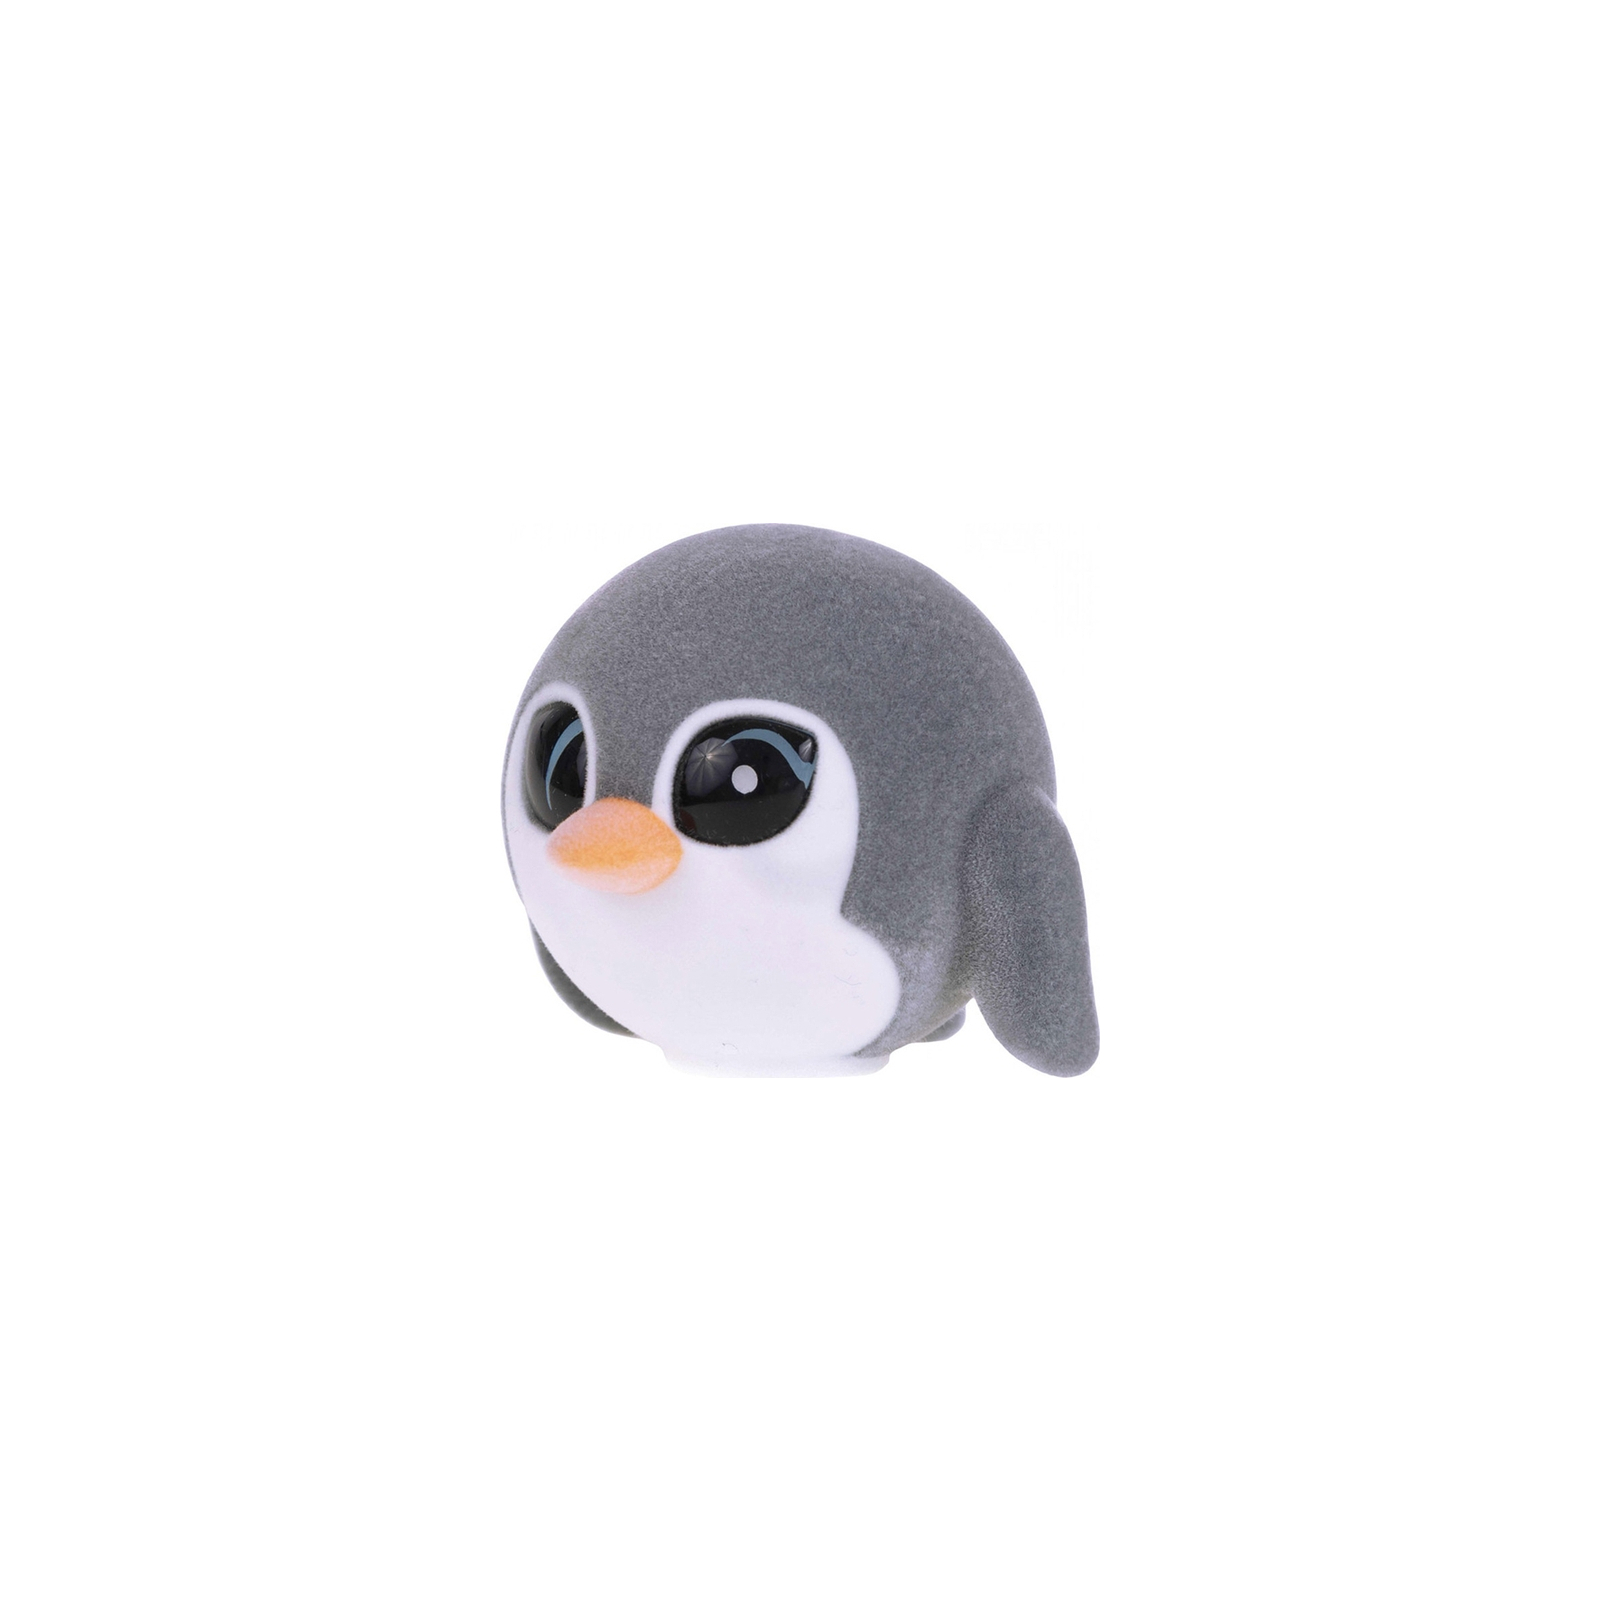 Фигурка Flockies S2 - Пингвин Филипп (FLO0410) изображение 3